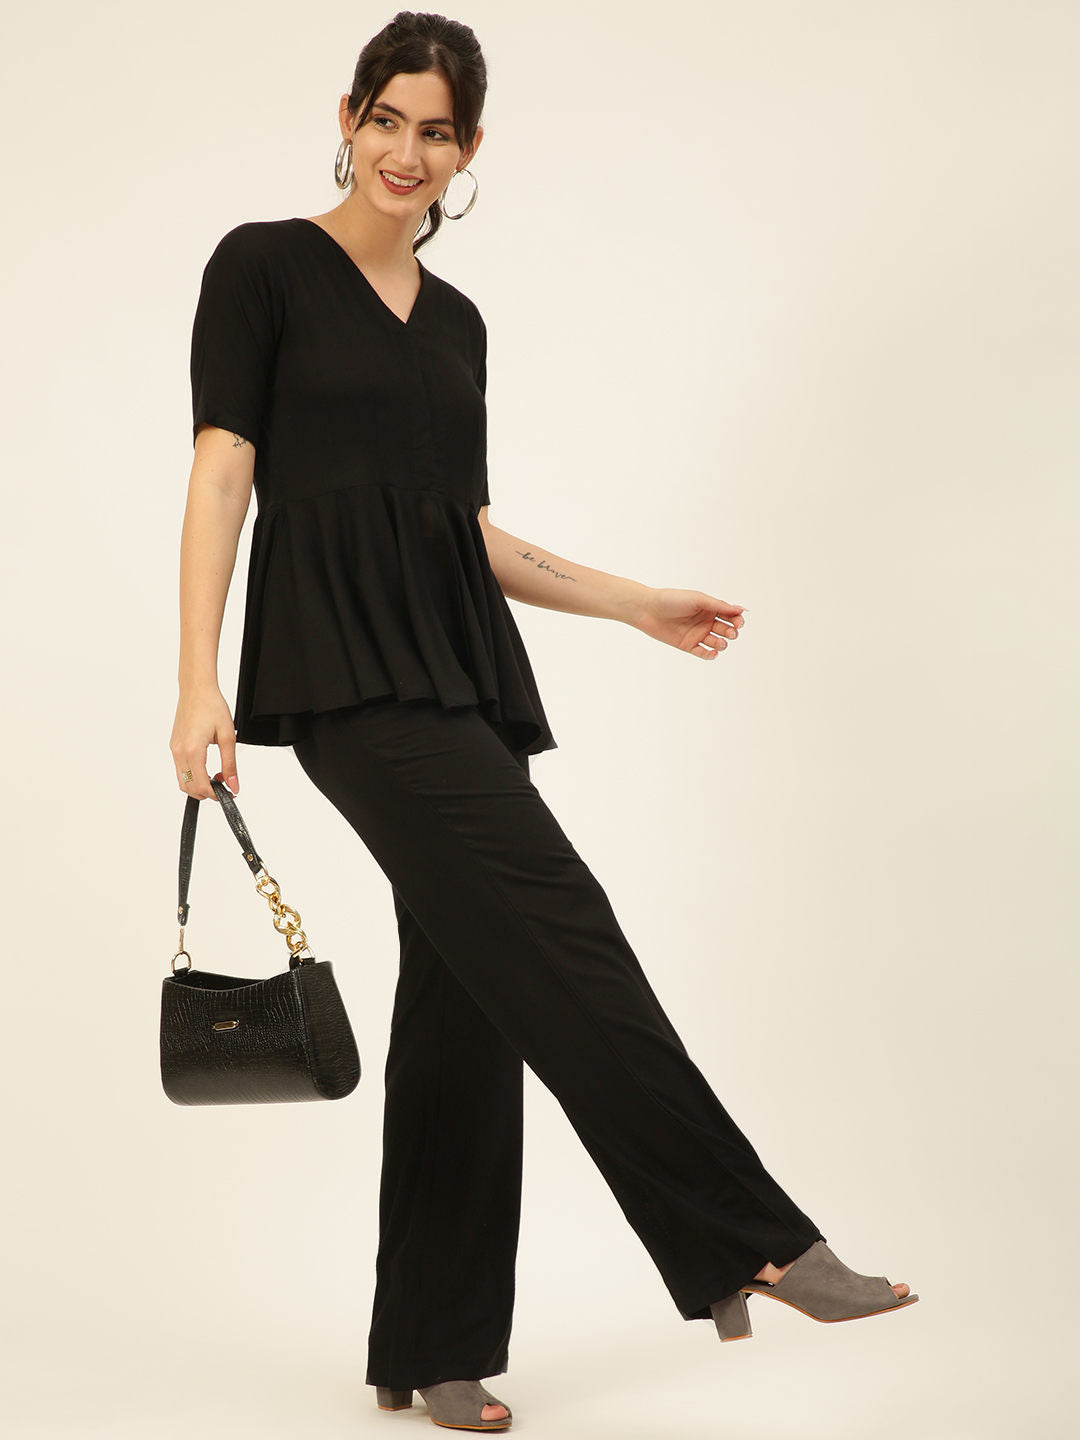 Premium Black V-Neck Peplum Style Top & Trouser Rayon Co-ord Set